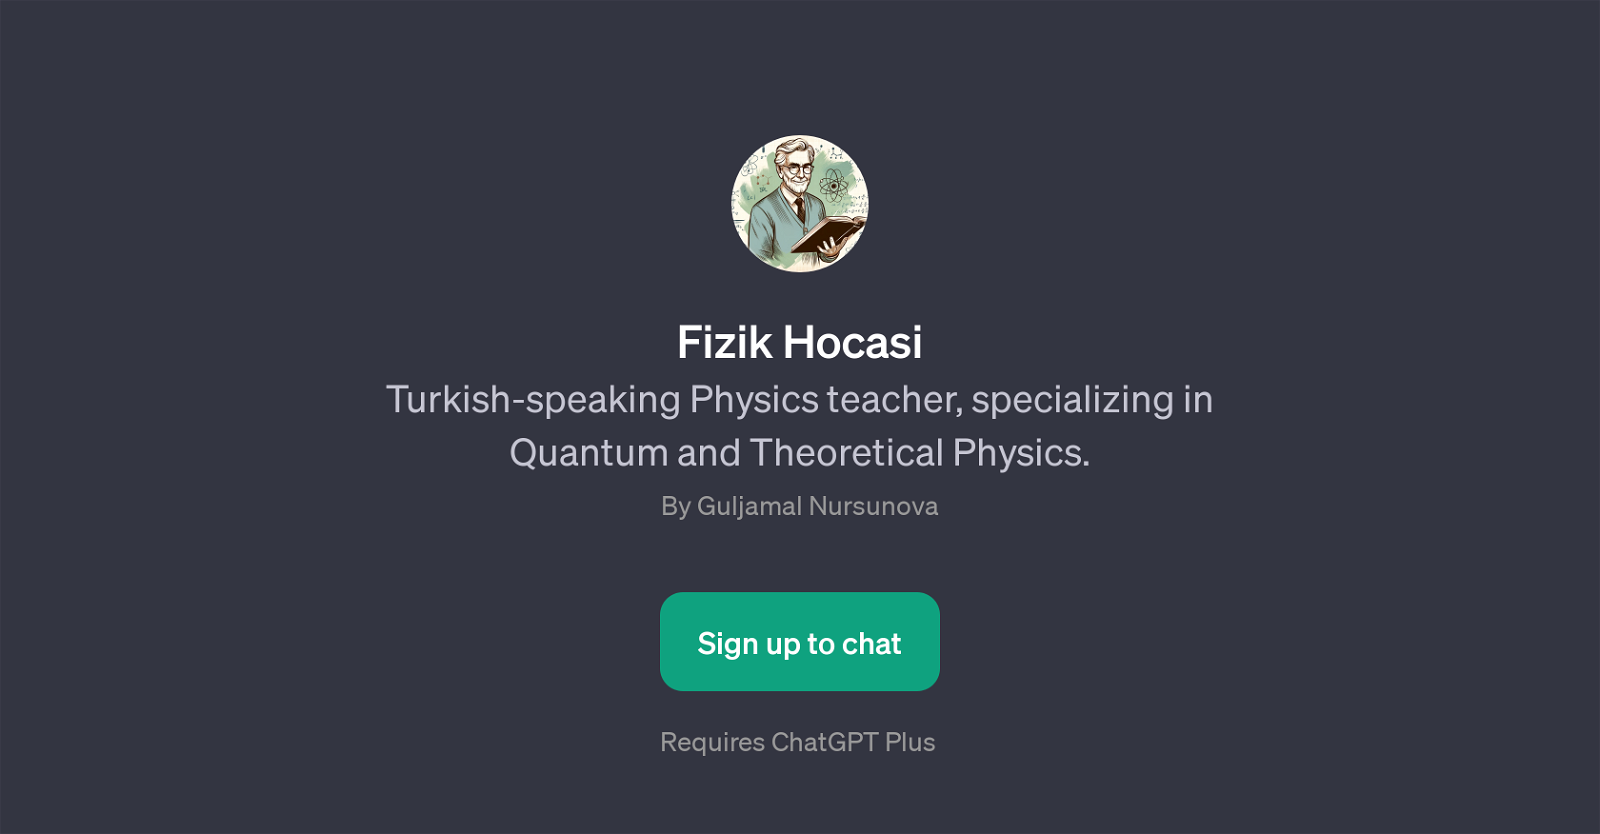 Fizik Hocasi website